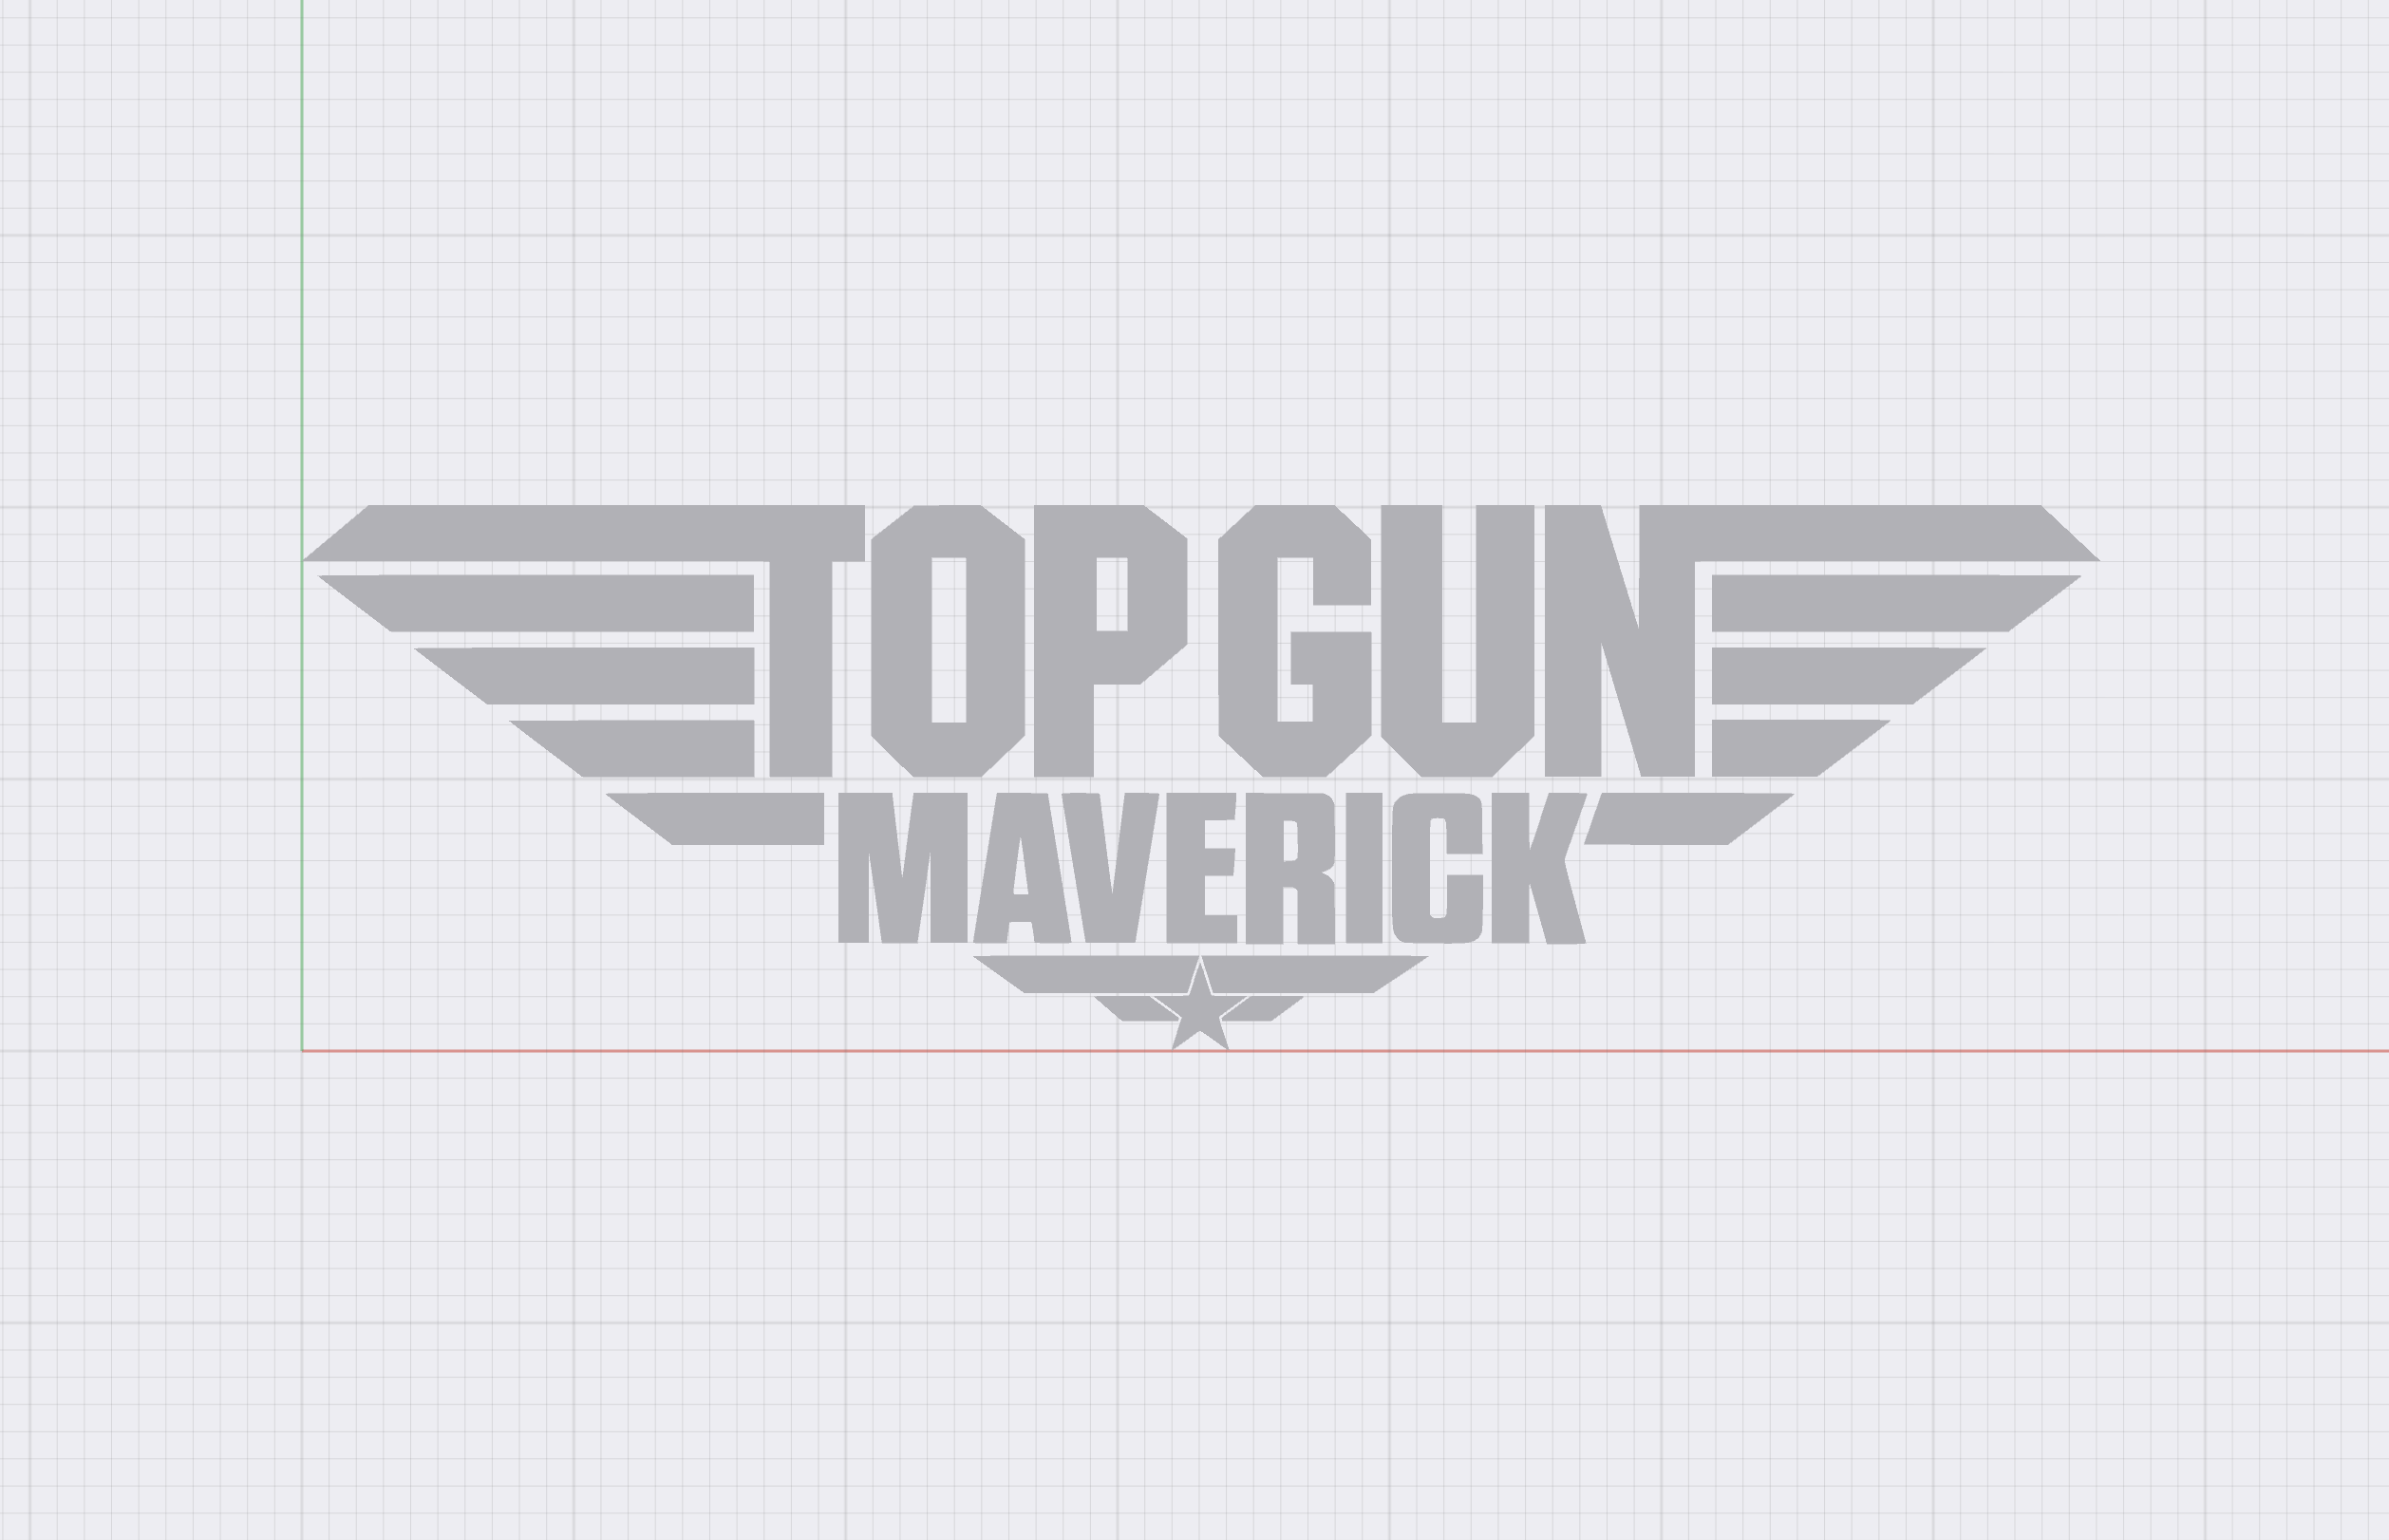 Official Top Gun Store: Jackets, Clothing, Merchandise for Men & Women